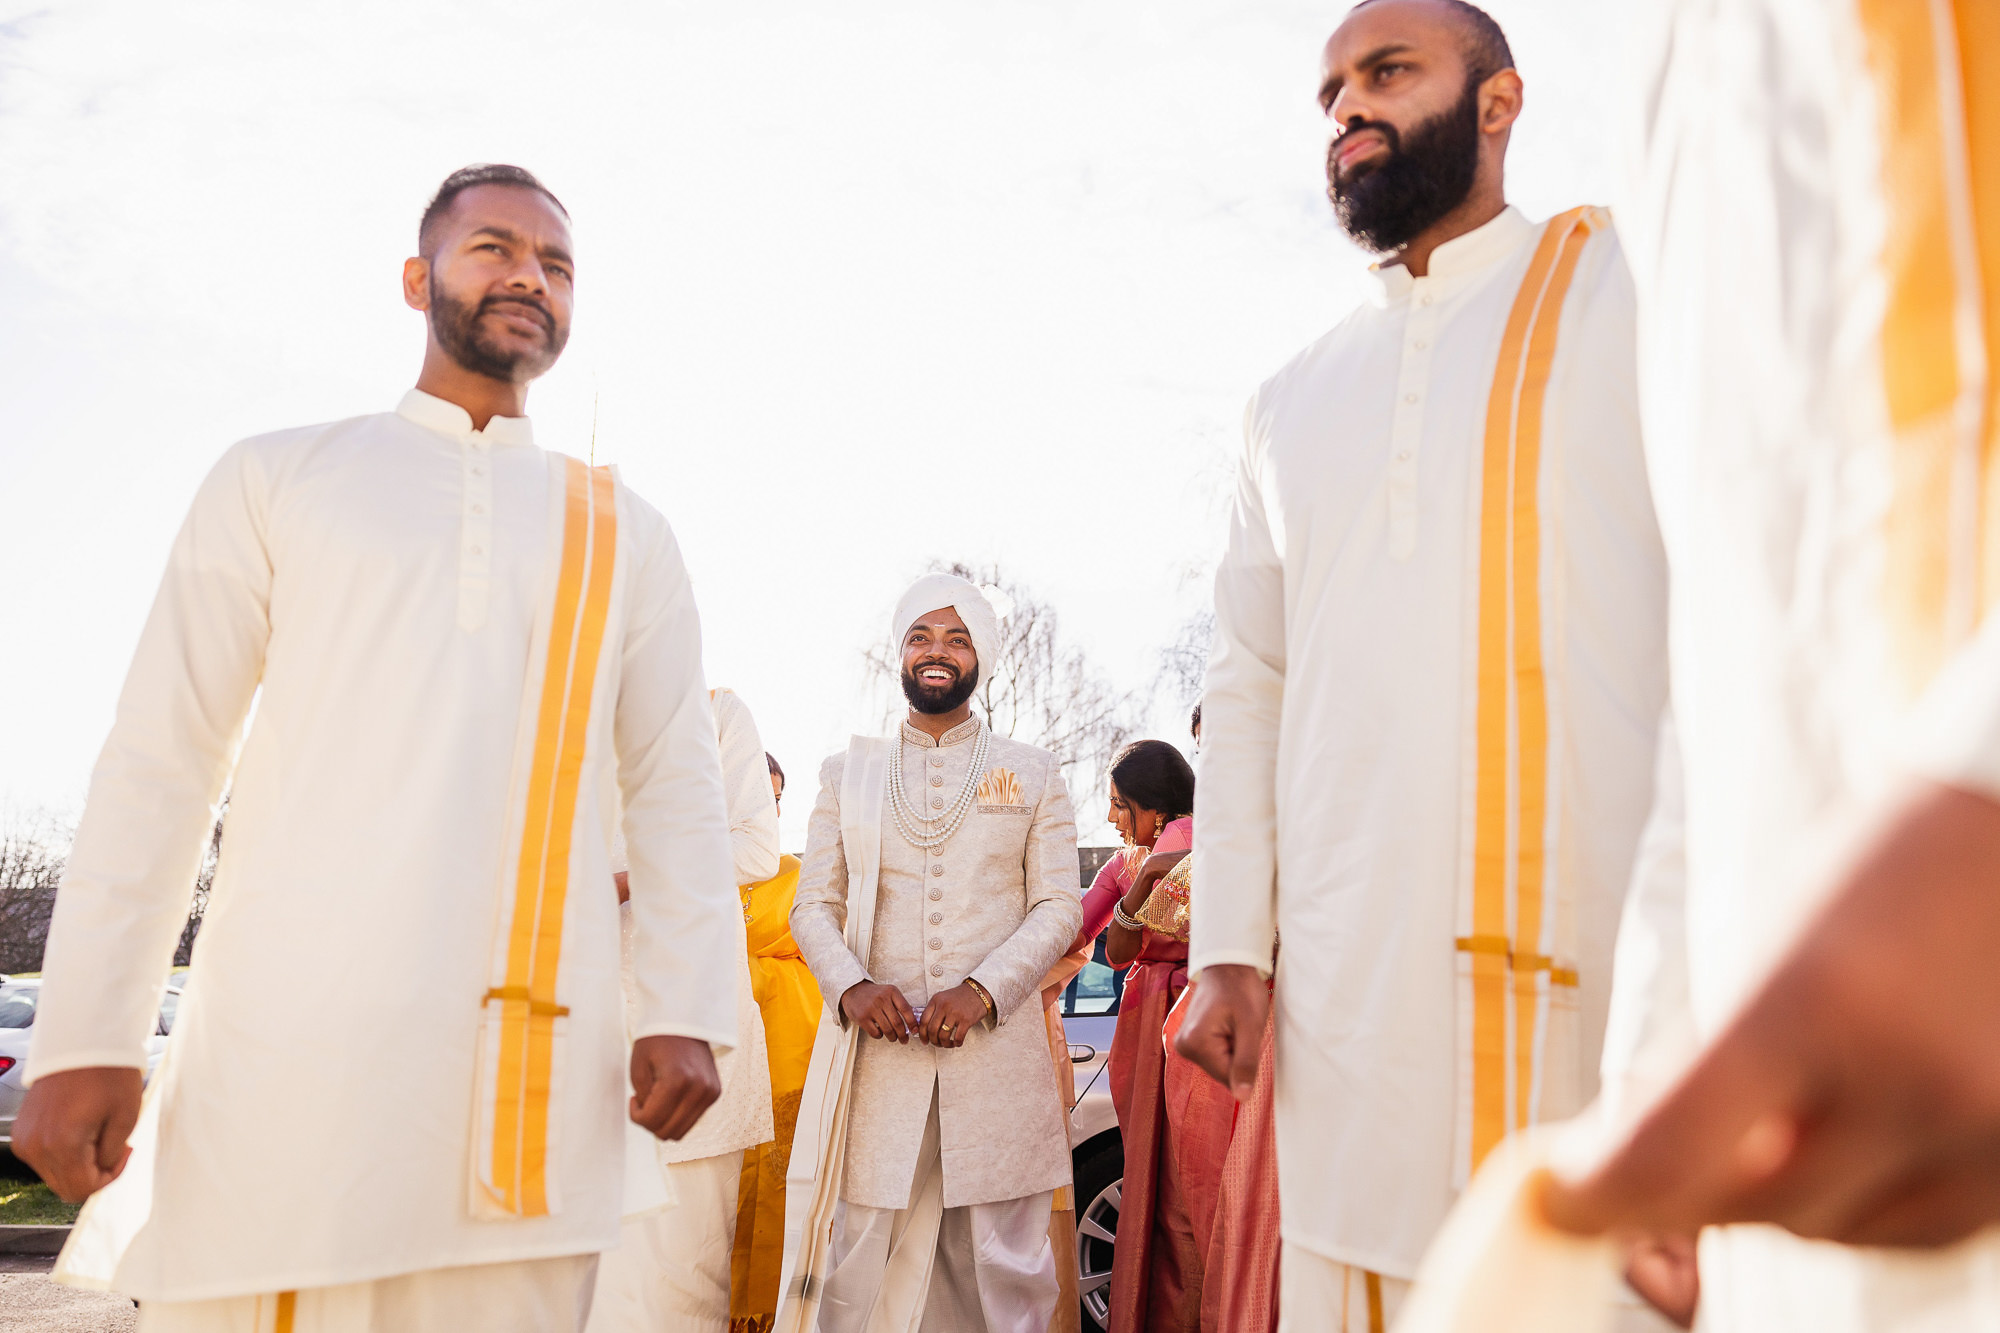 Tamil Wedding, Tamil Wedding Photographer, Stockley Park, Religious ceremony, groom arrival